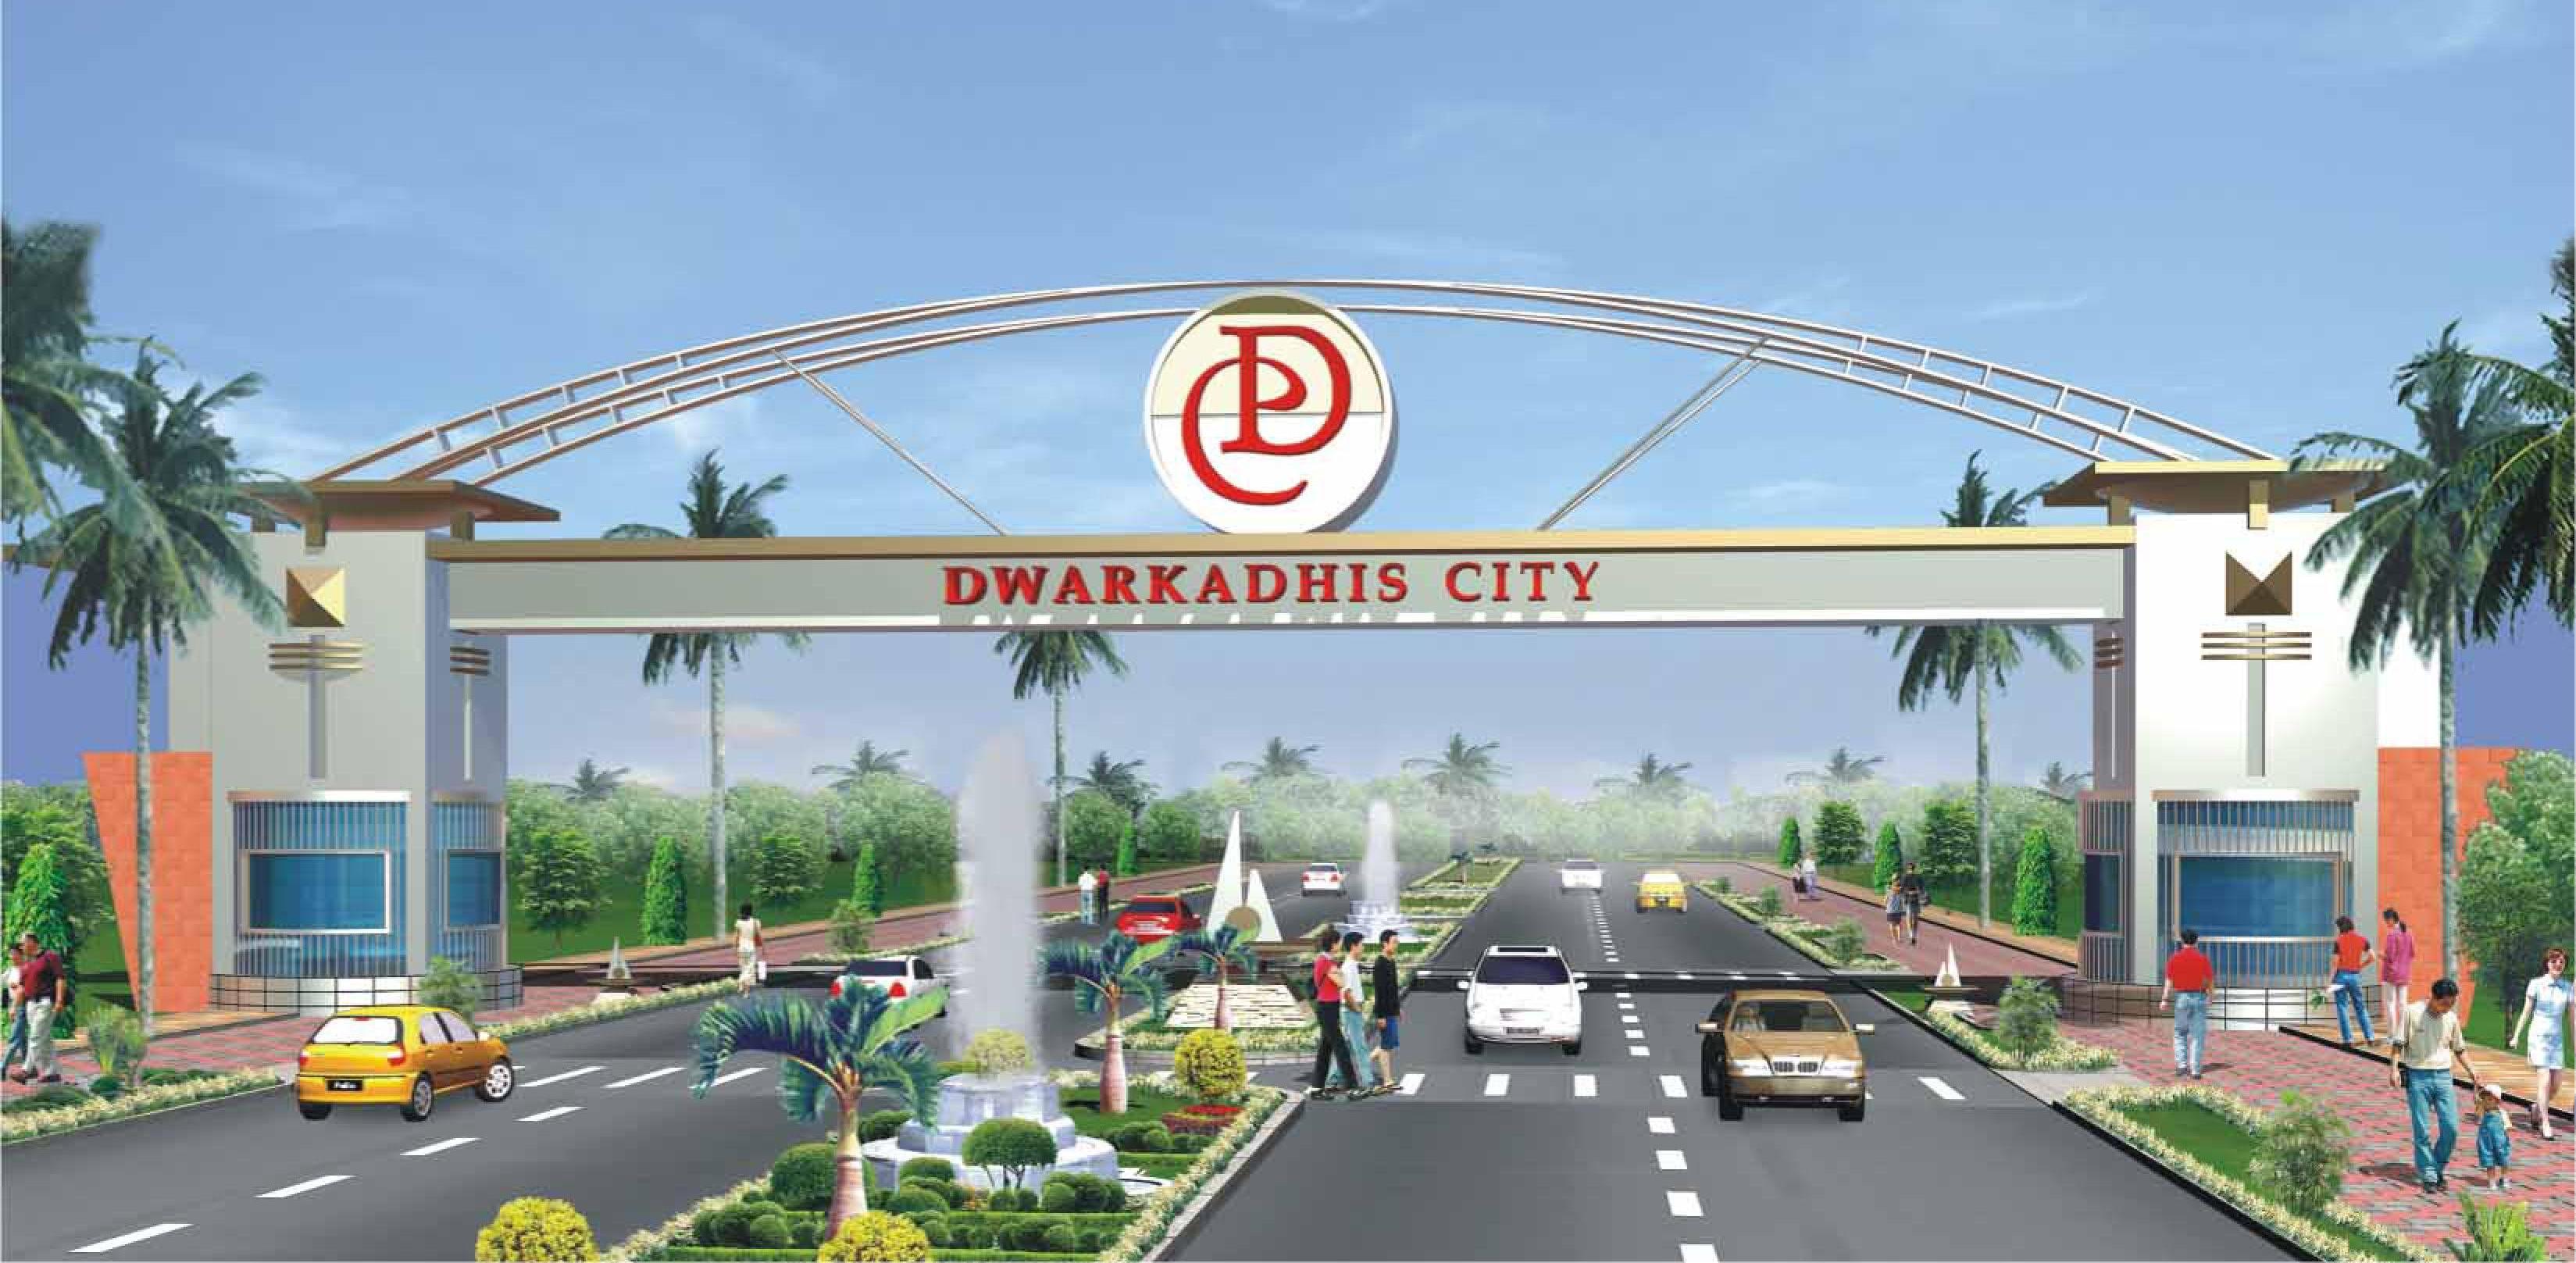  Dwarkadhis City Home Loan